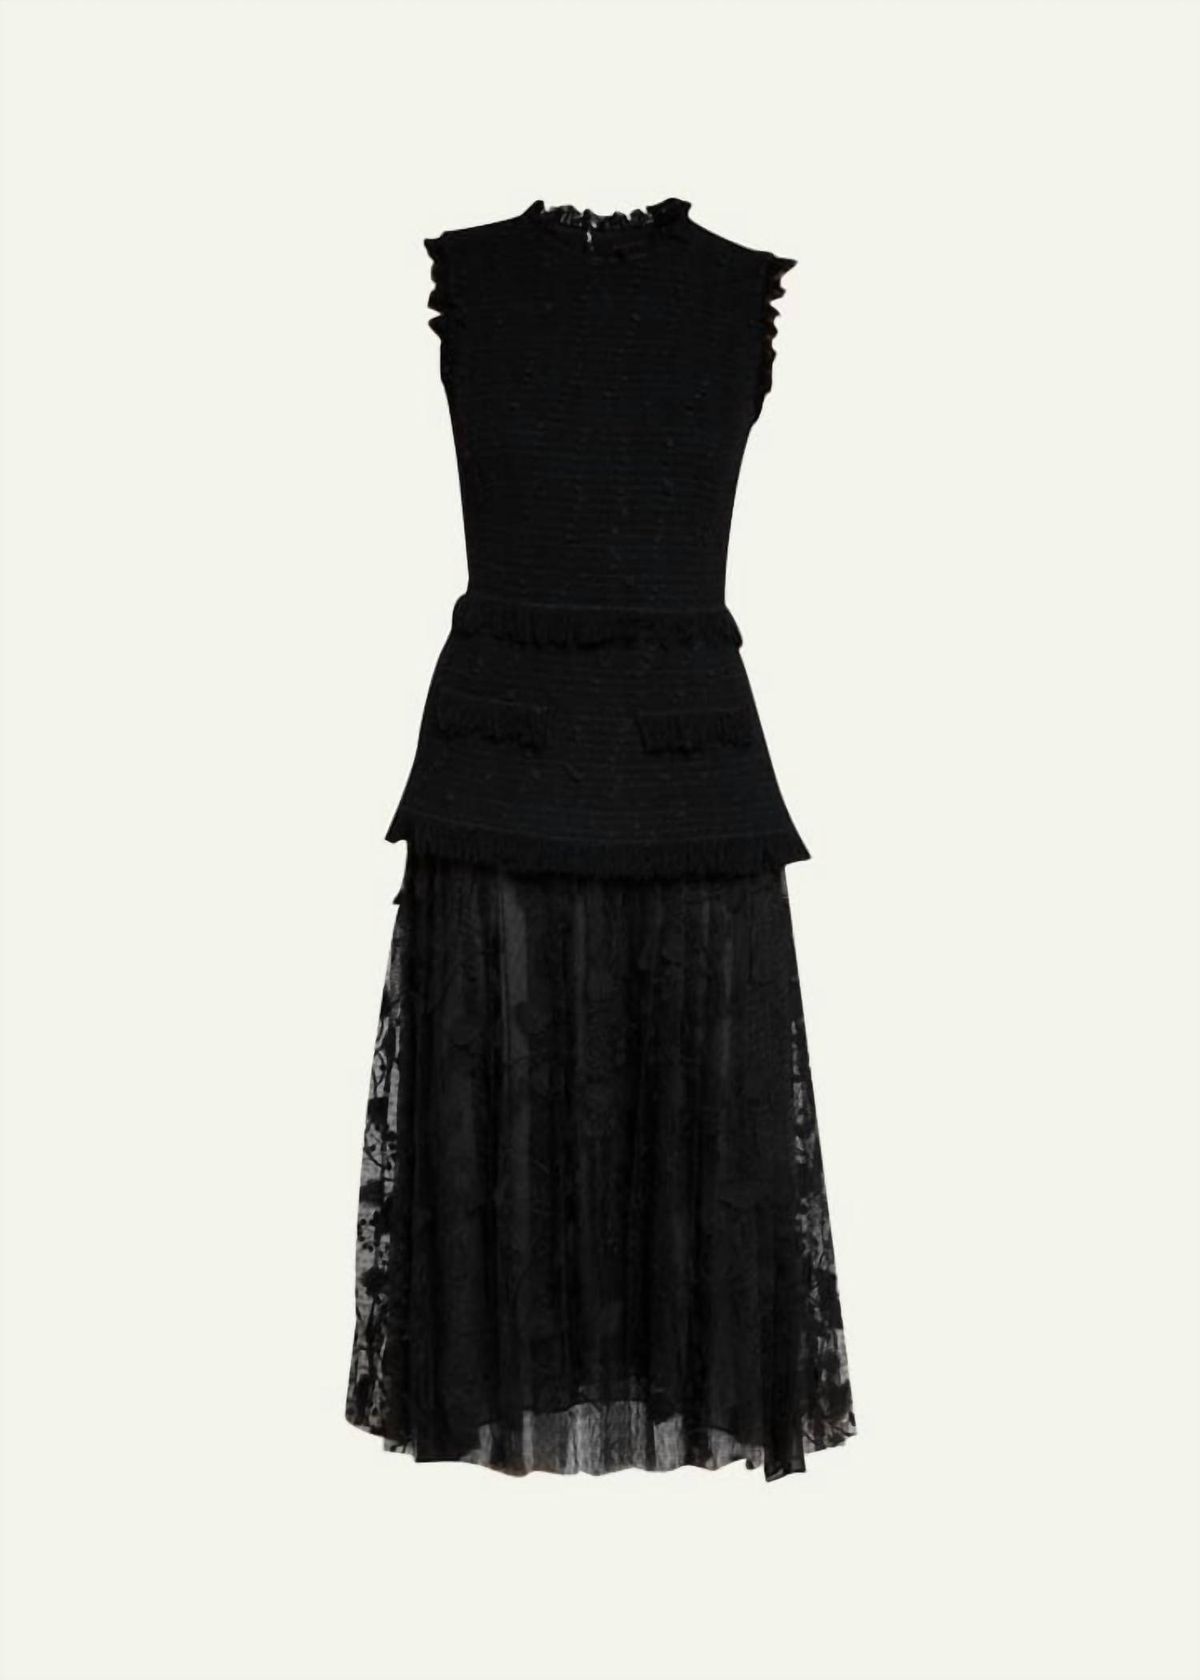 Style 1-4093487207-3710 Oscar de la Renta Size 8 Lace Black Cocktail Dress on Queenly